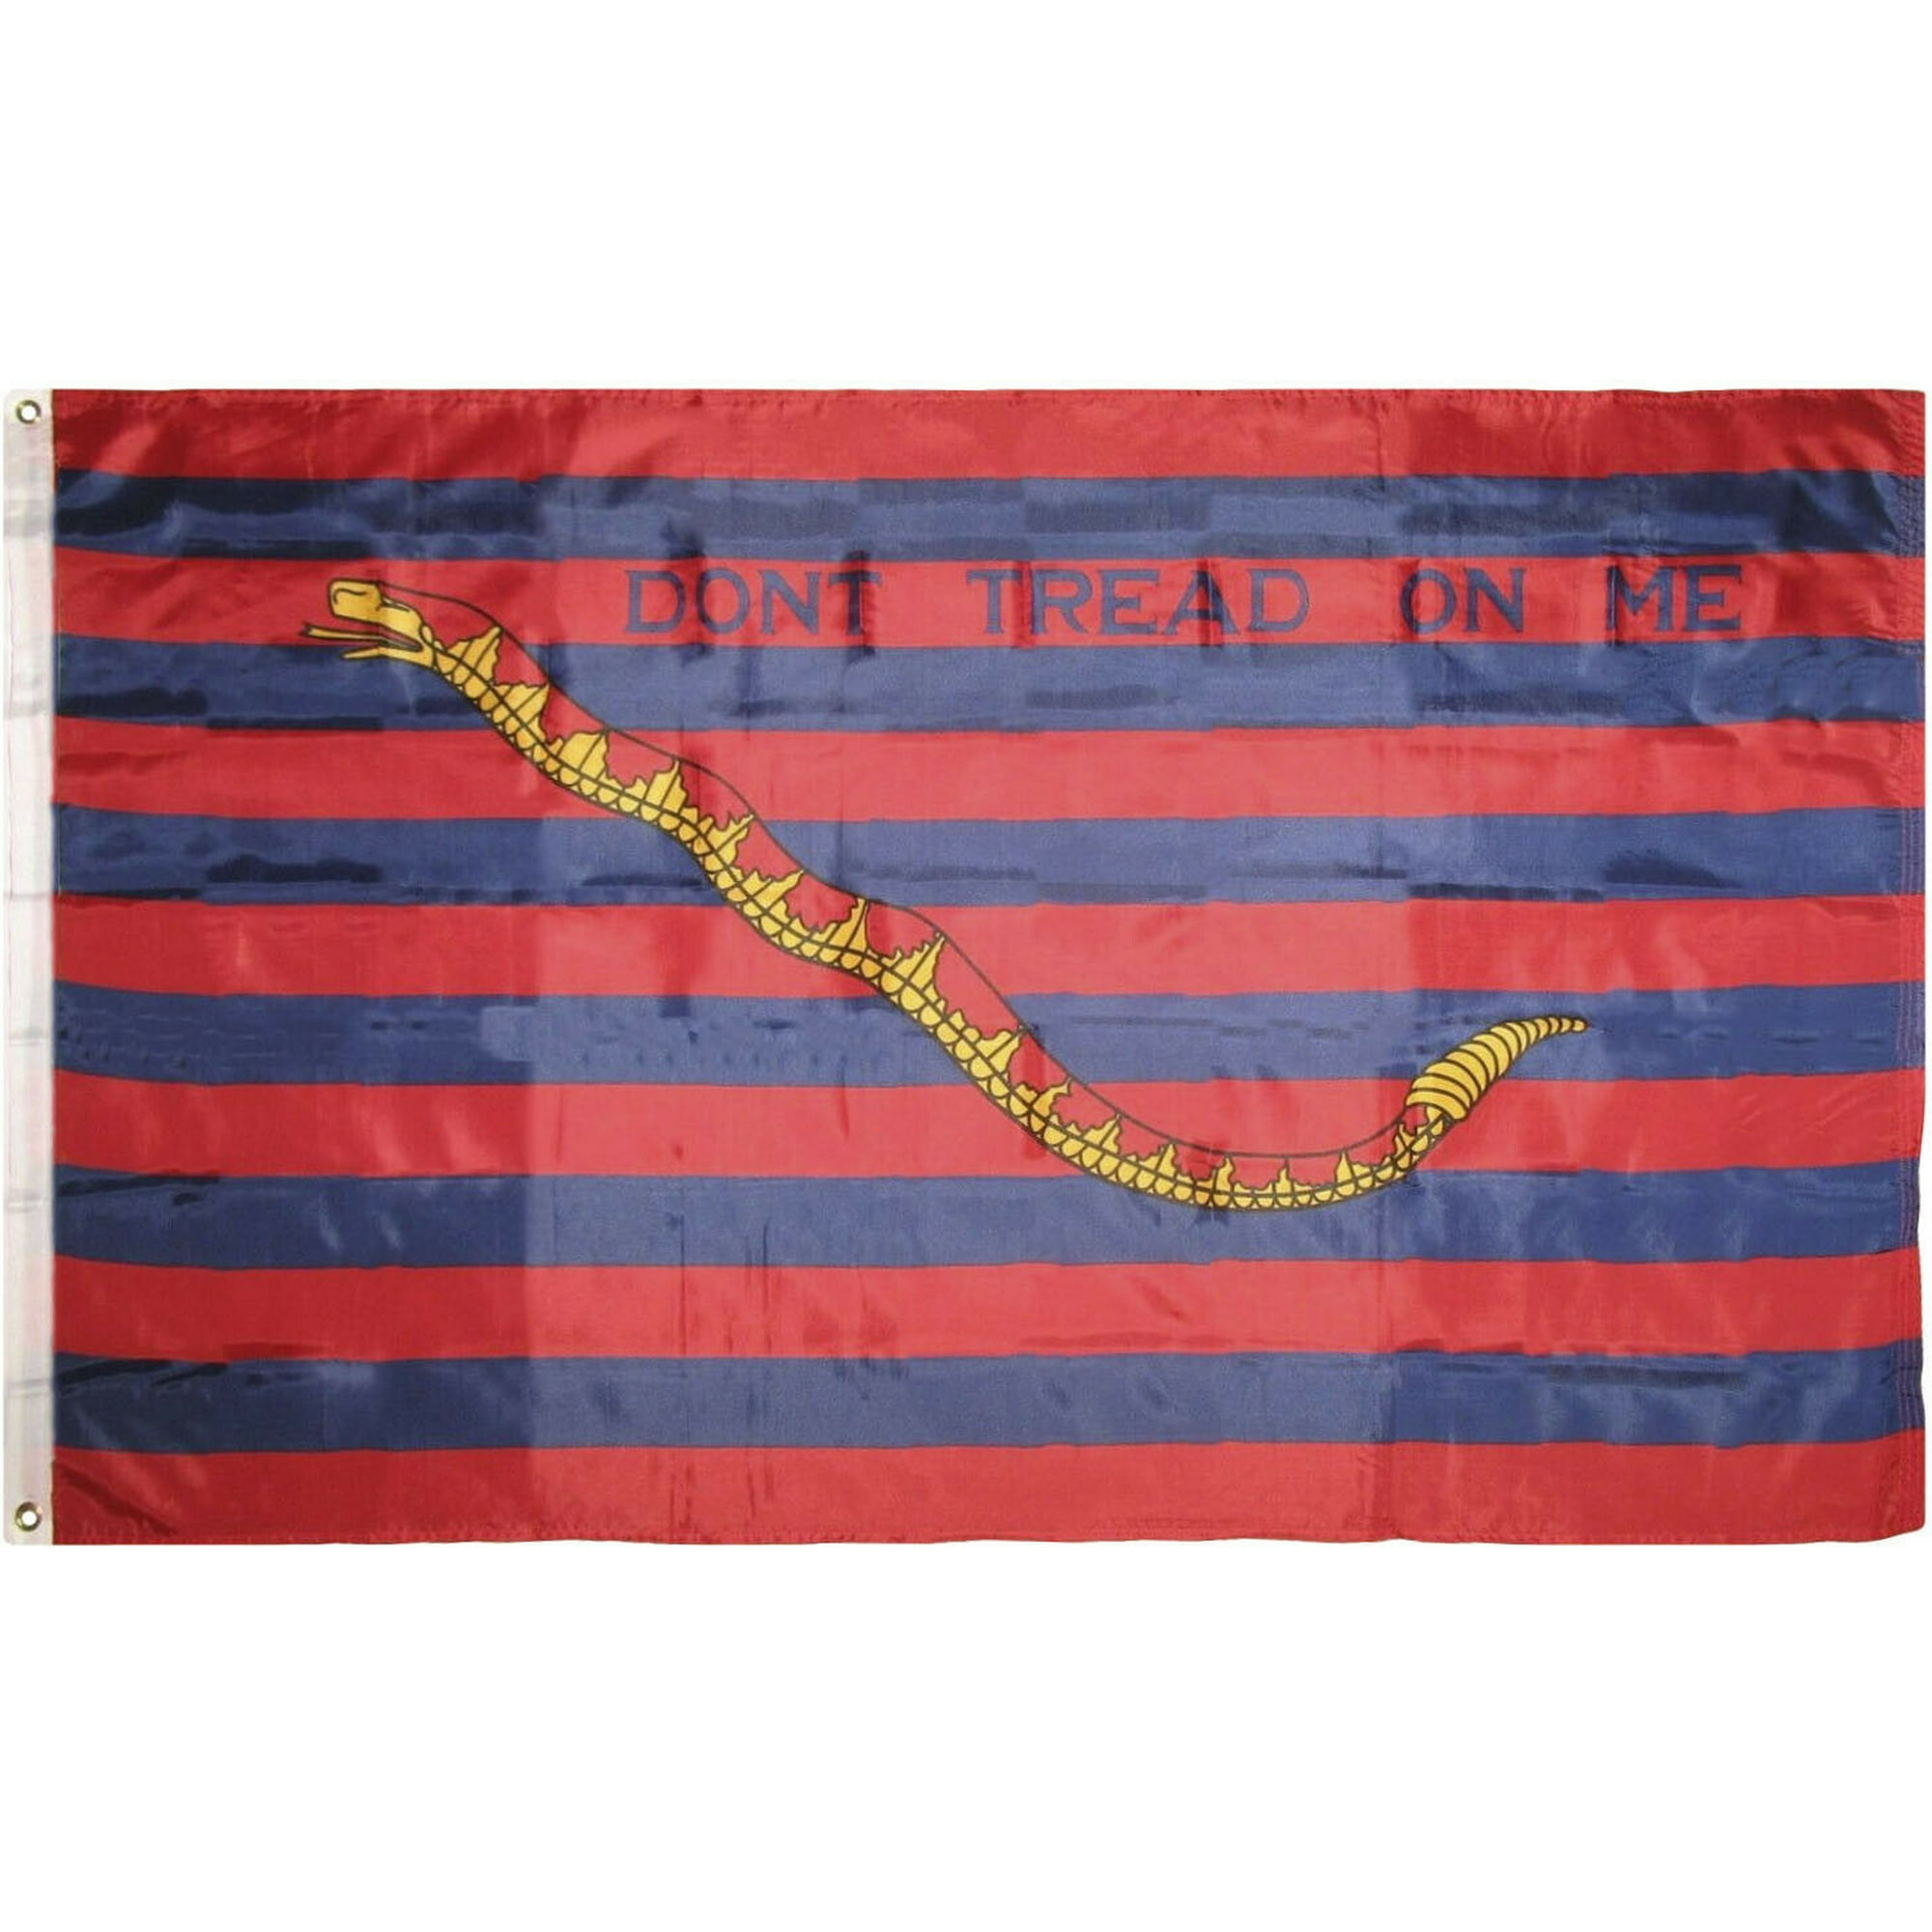 1776 revolutionary war flags